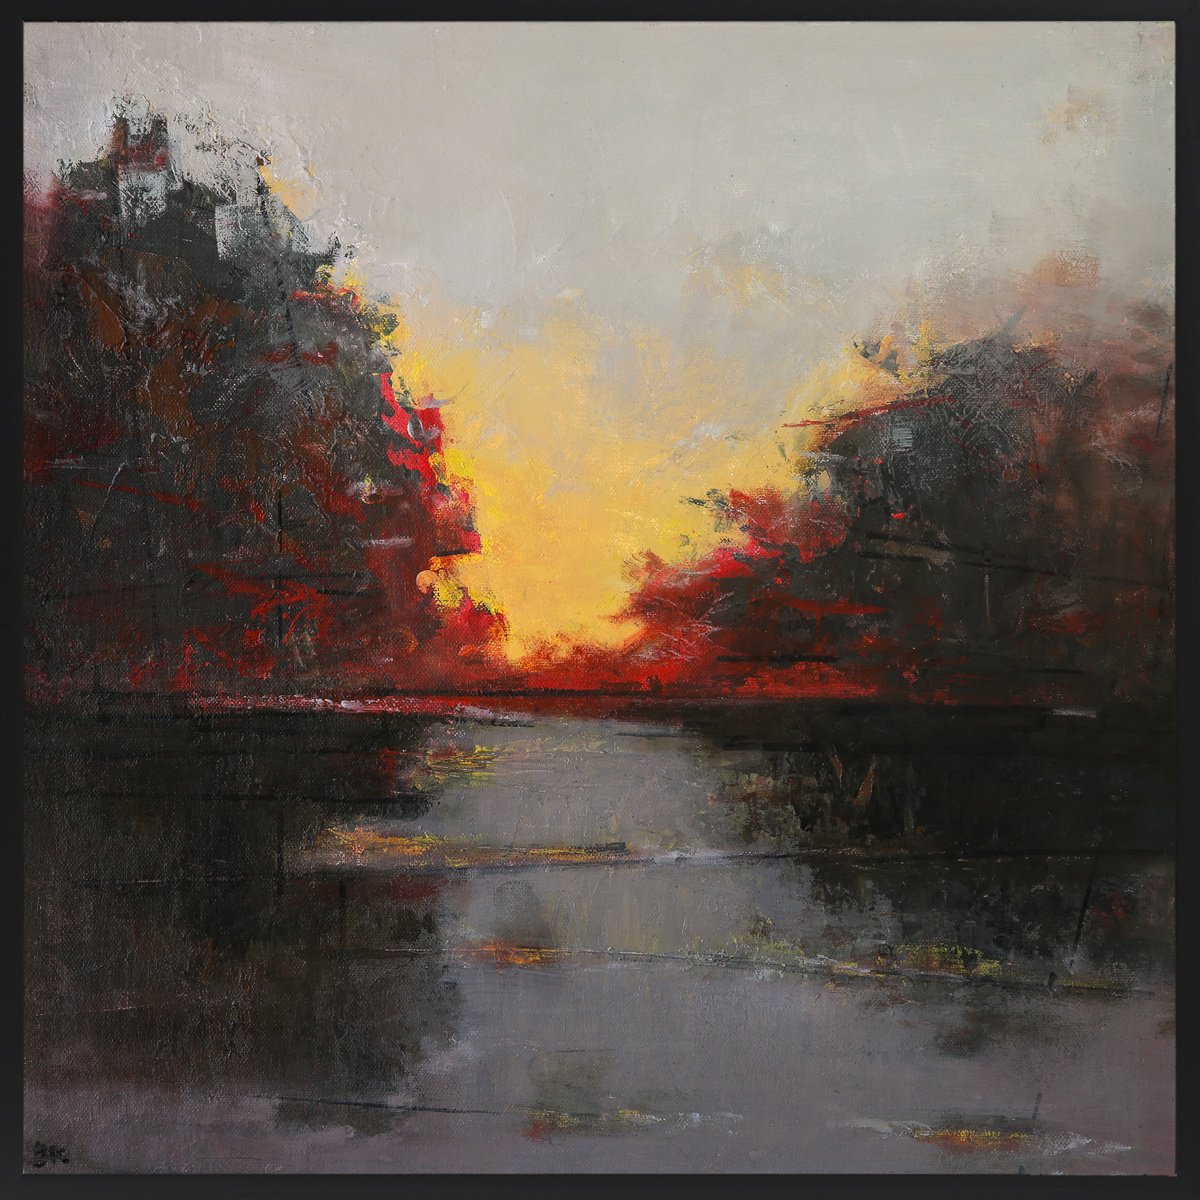 Sunset on the River by Bo Kravchenko